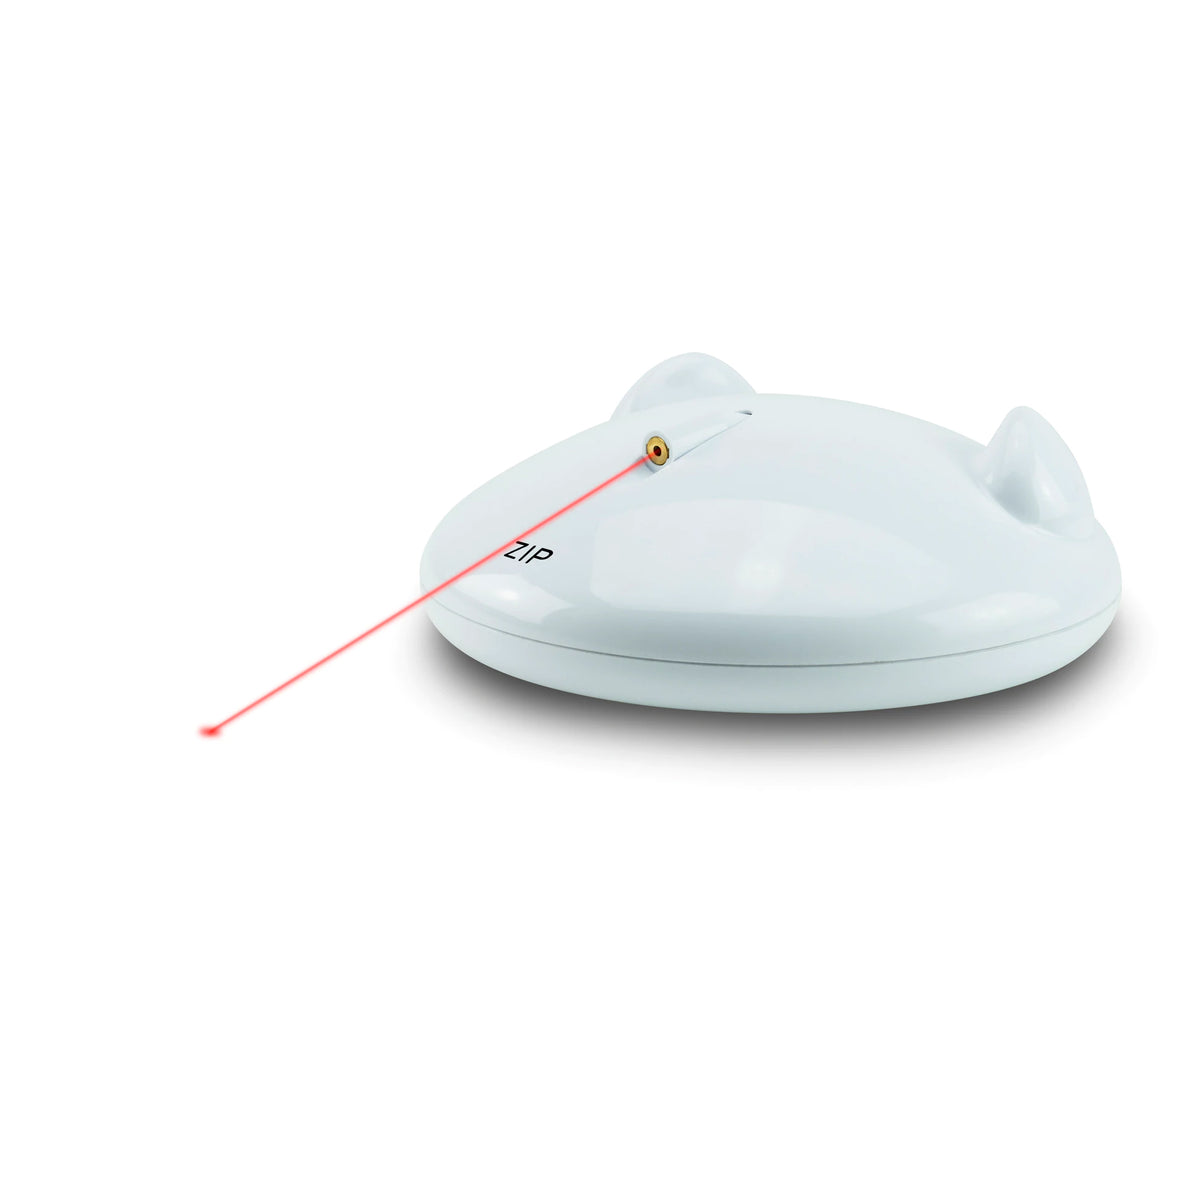 FroliCat Zip Automatic Laser Cat Toy